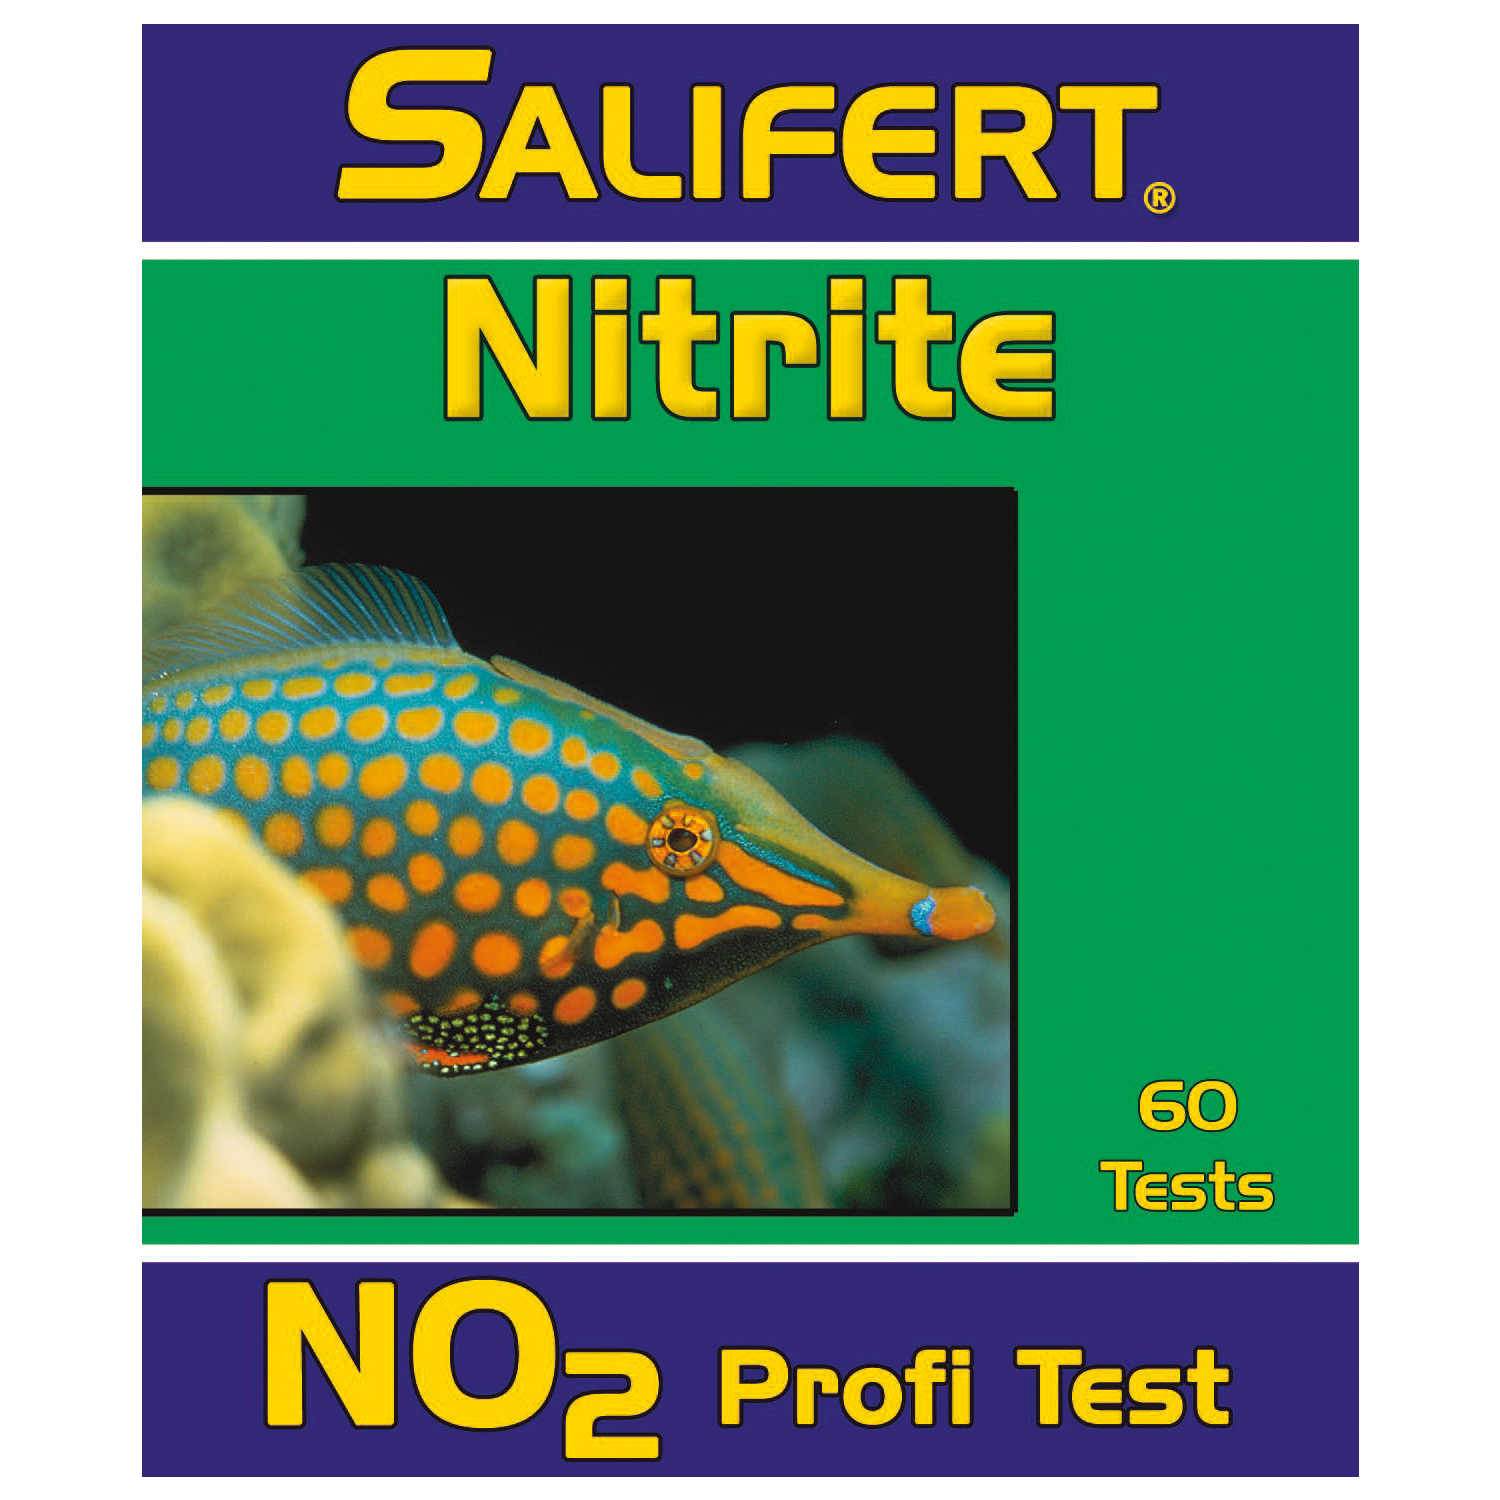 API | Nitrite (NO2) Test Kit